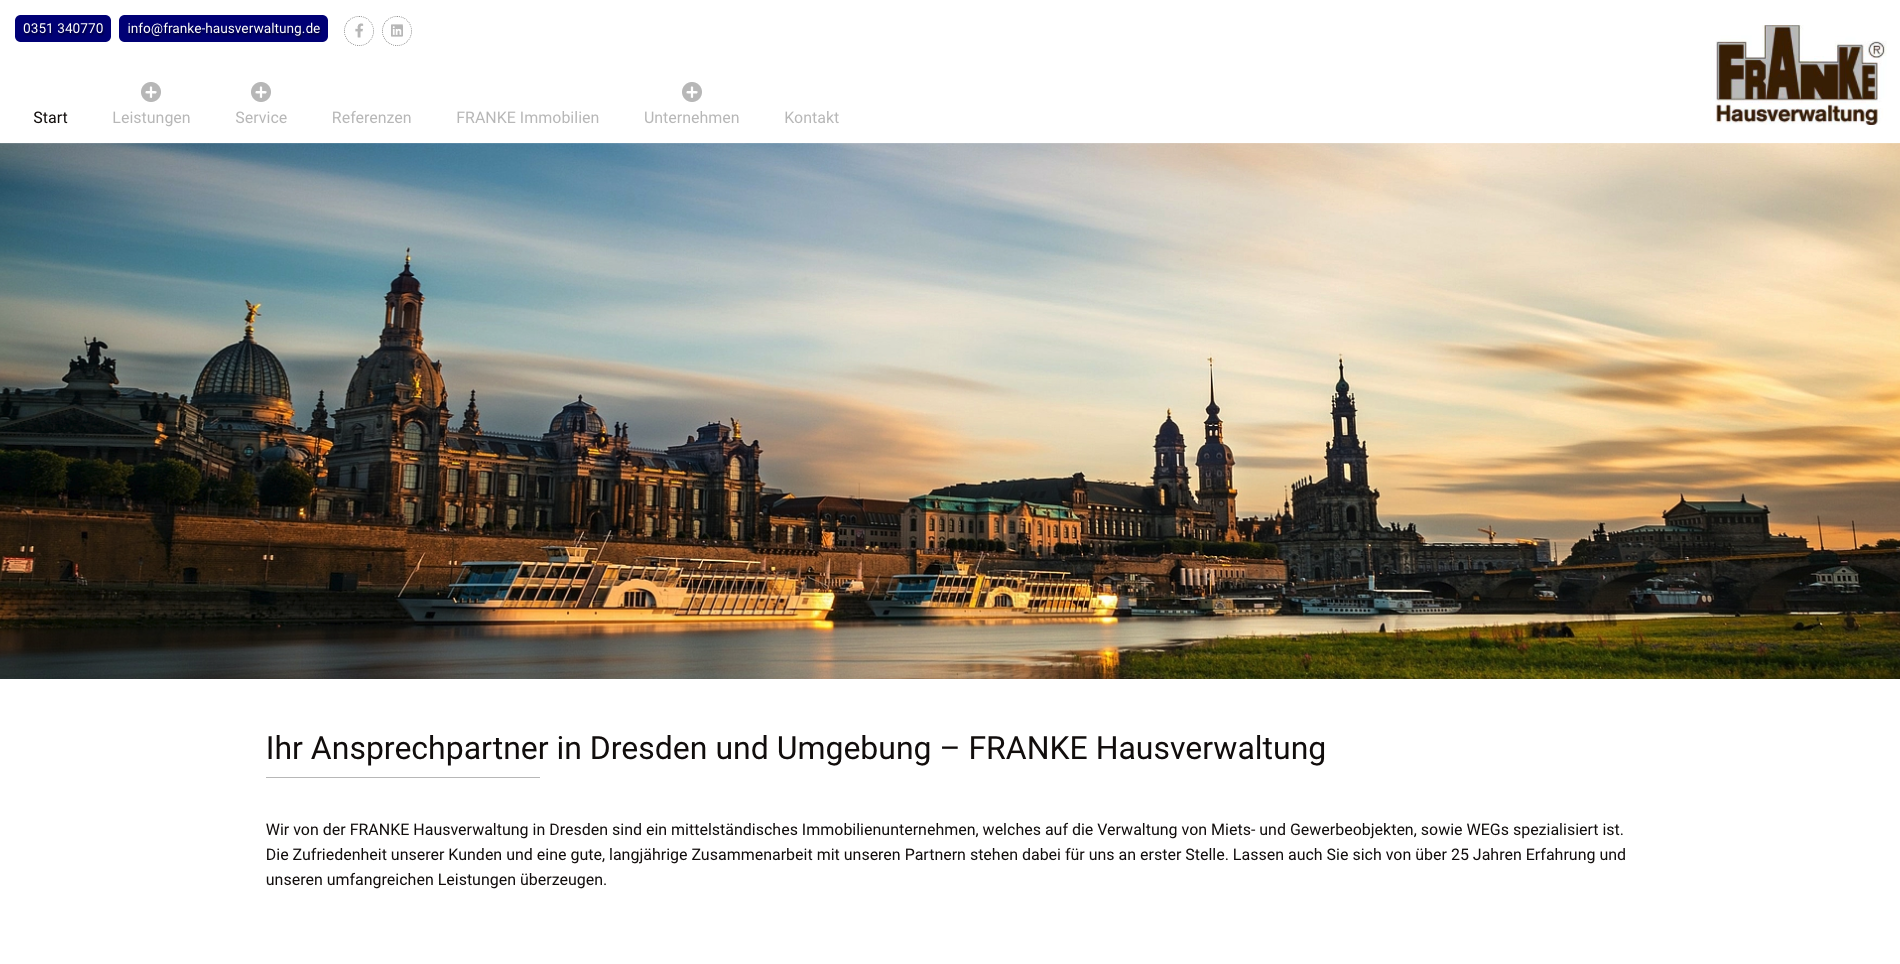 FRANKE Hausverwaltung GmbH